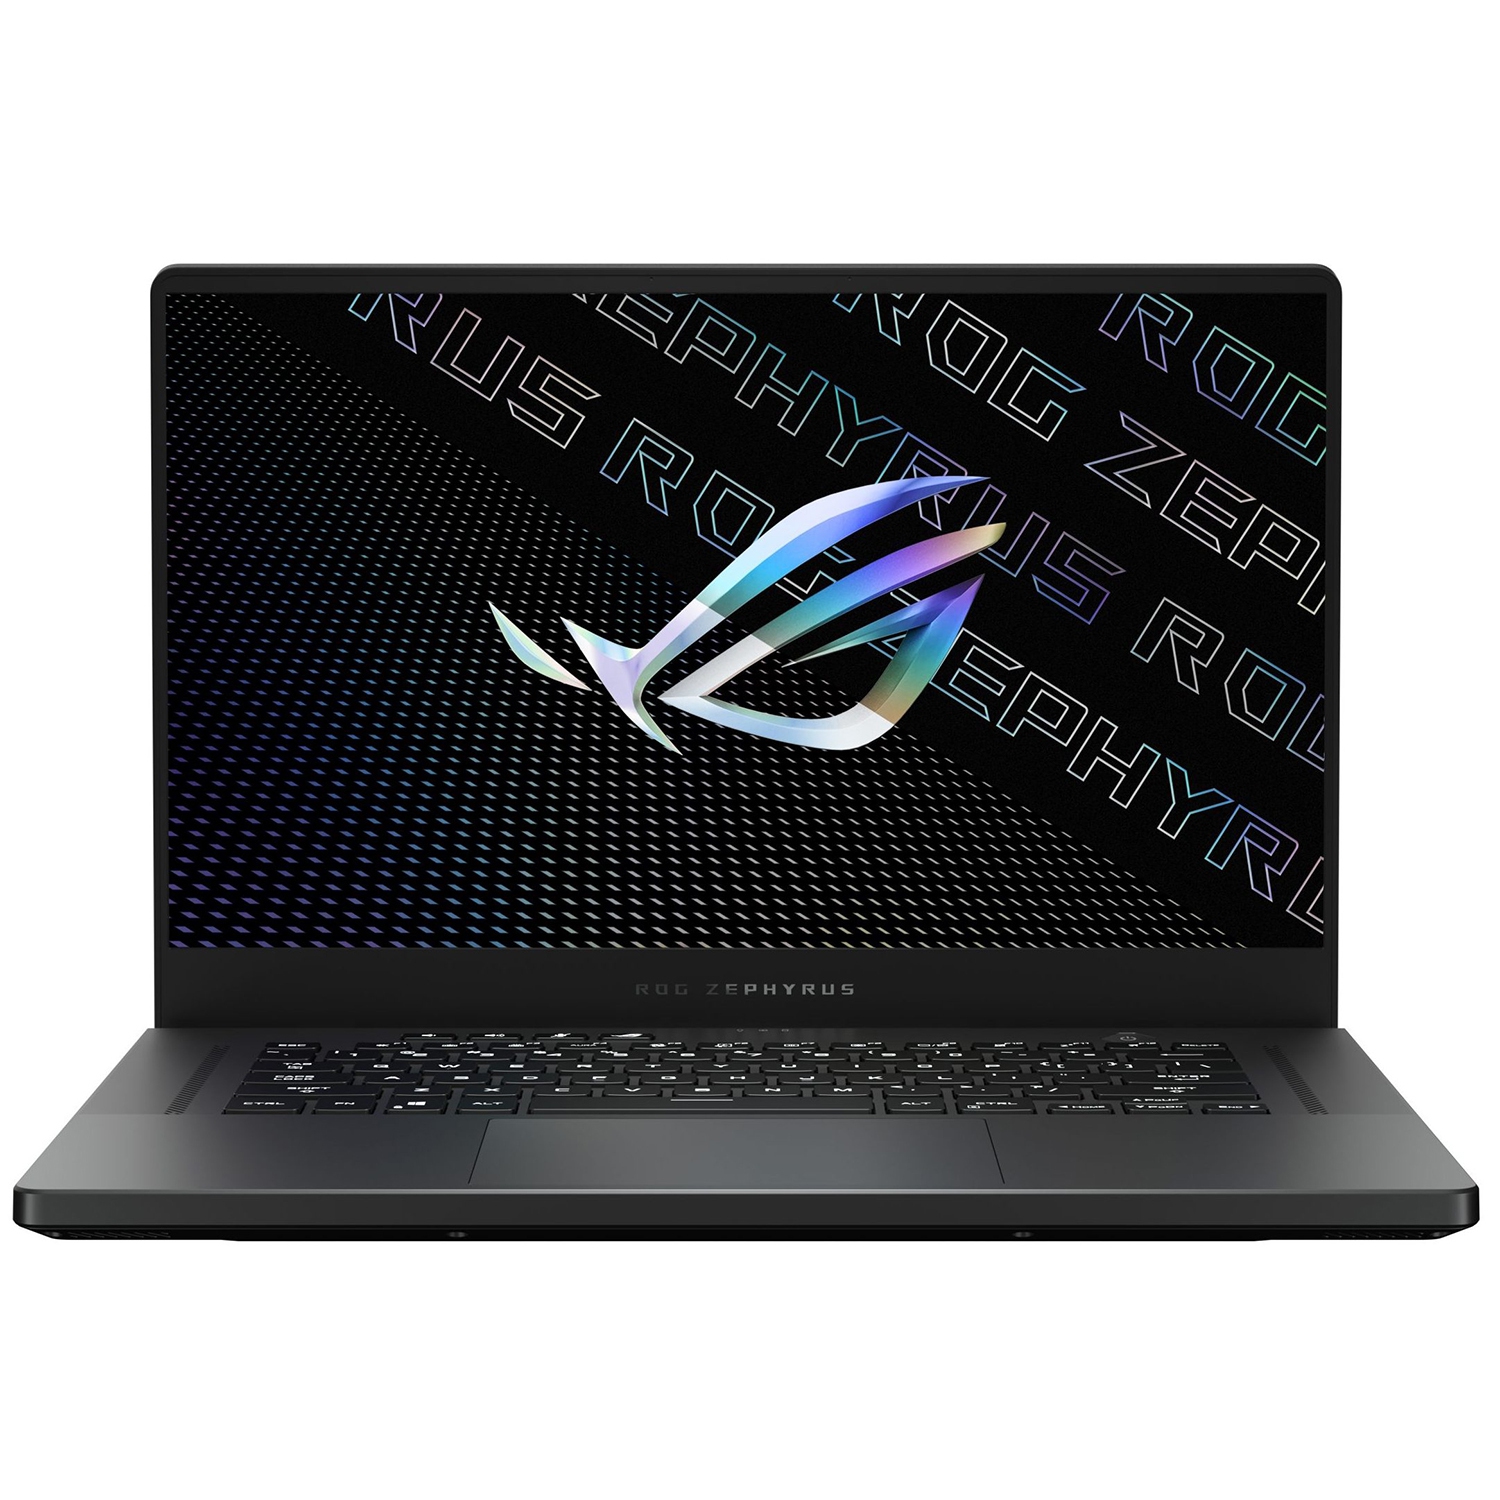 Custom ASUS ROG Zephyrus G15 Laptop (AMD Ryzen 9 5900HS, 8GB RAM, 512GB PCIe SSD, NVIDIA RTX 3060, Win 10 Pro)